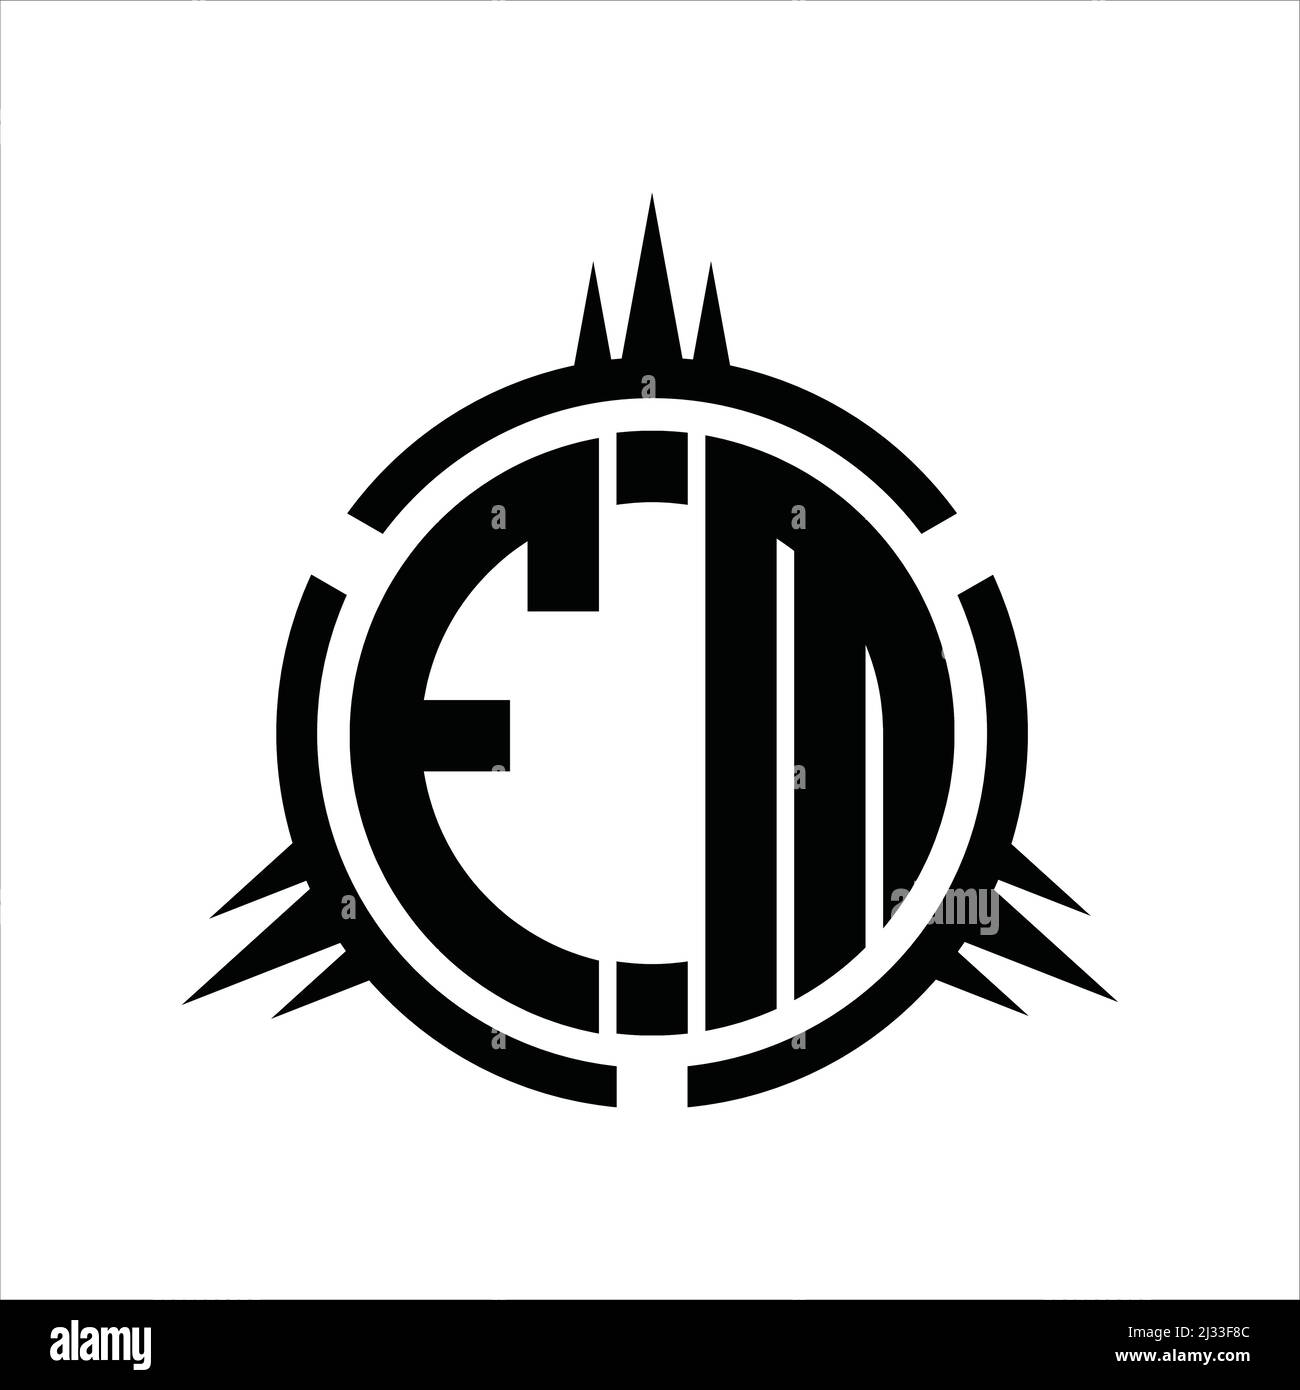 FM Logo monogram isolated on circle element design template Stock Vector